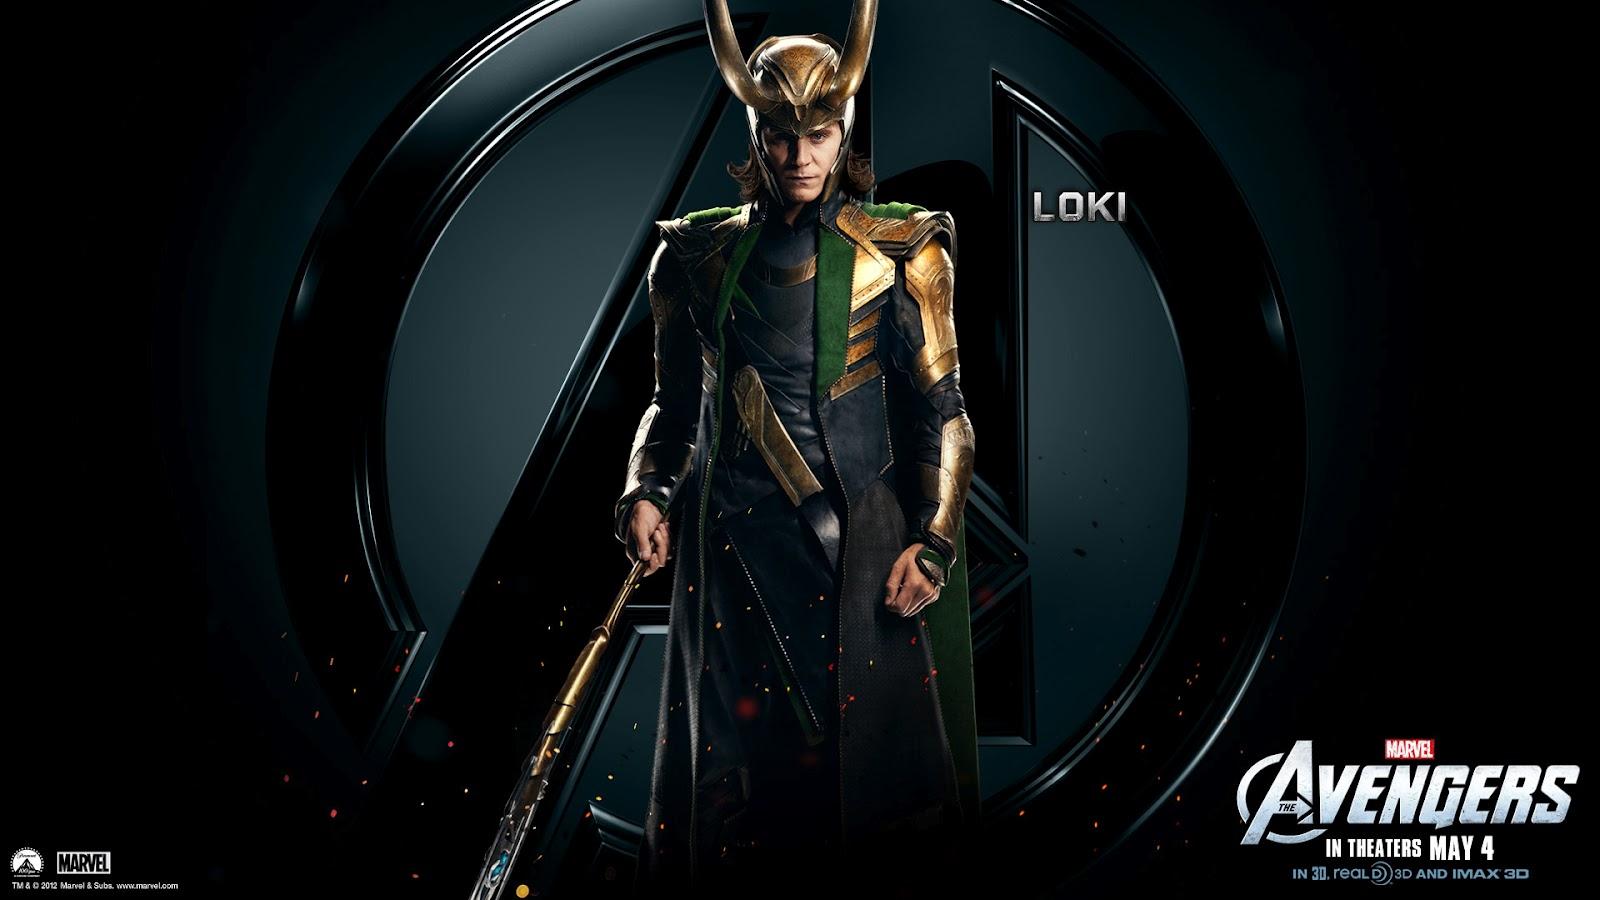 Download Avengers Wallpaper HD The Avengers Villain Loki HD